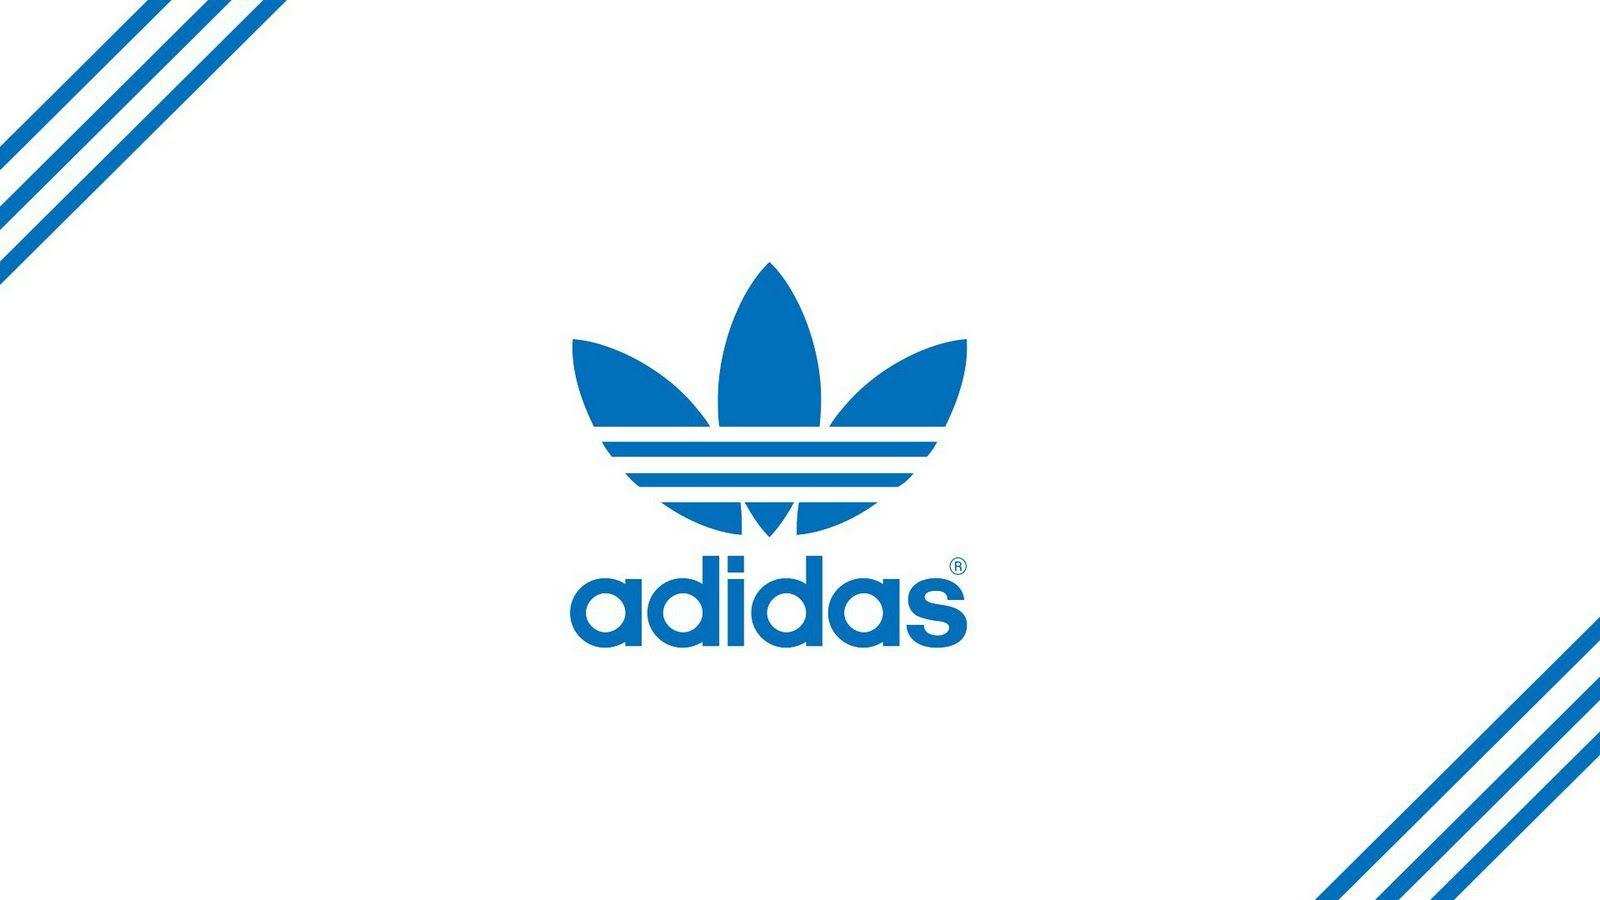 Adidas logo Wallpaper 13 109943 Image HD Wallpaper. Wallfoy.com